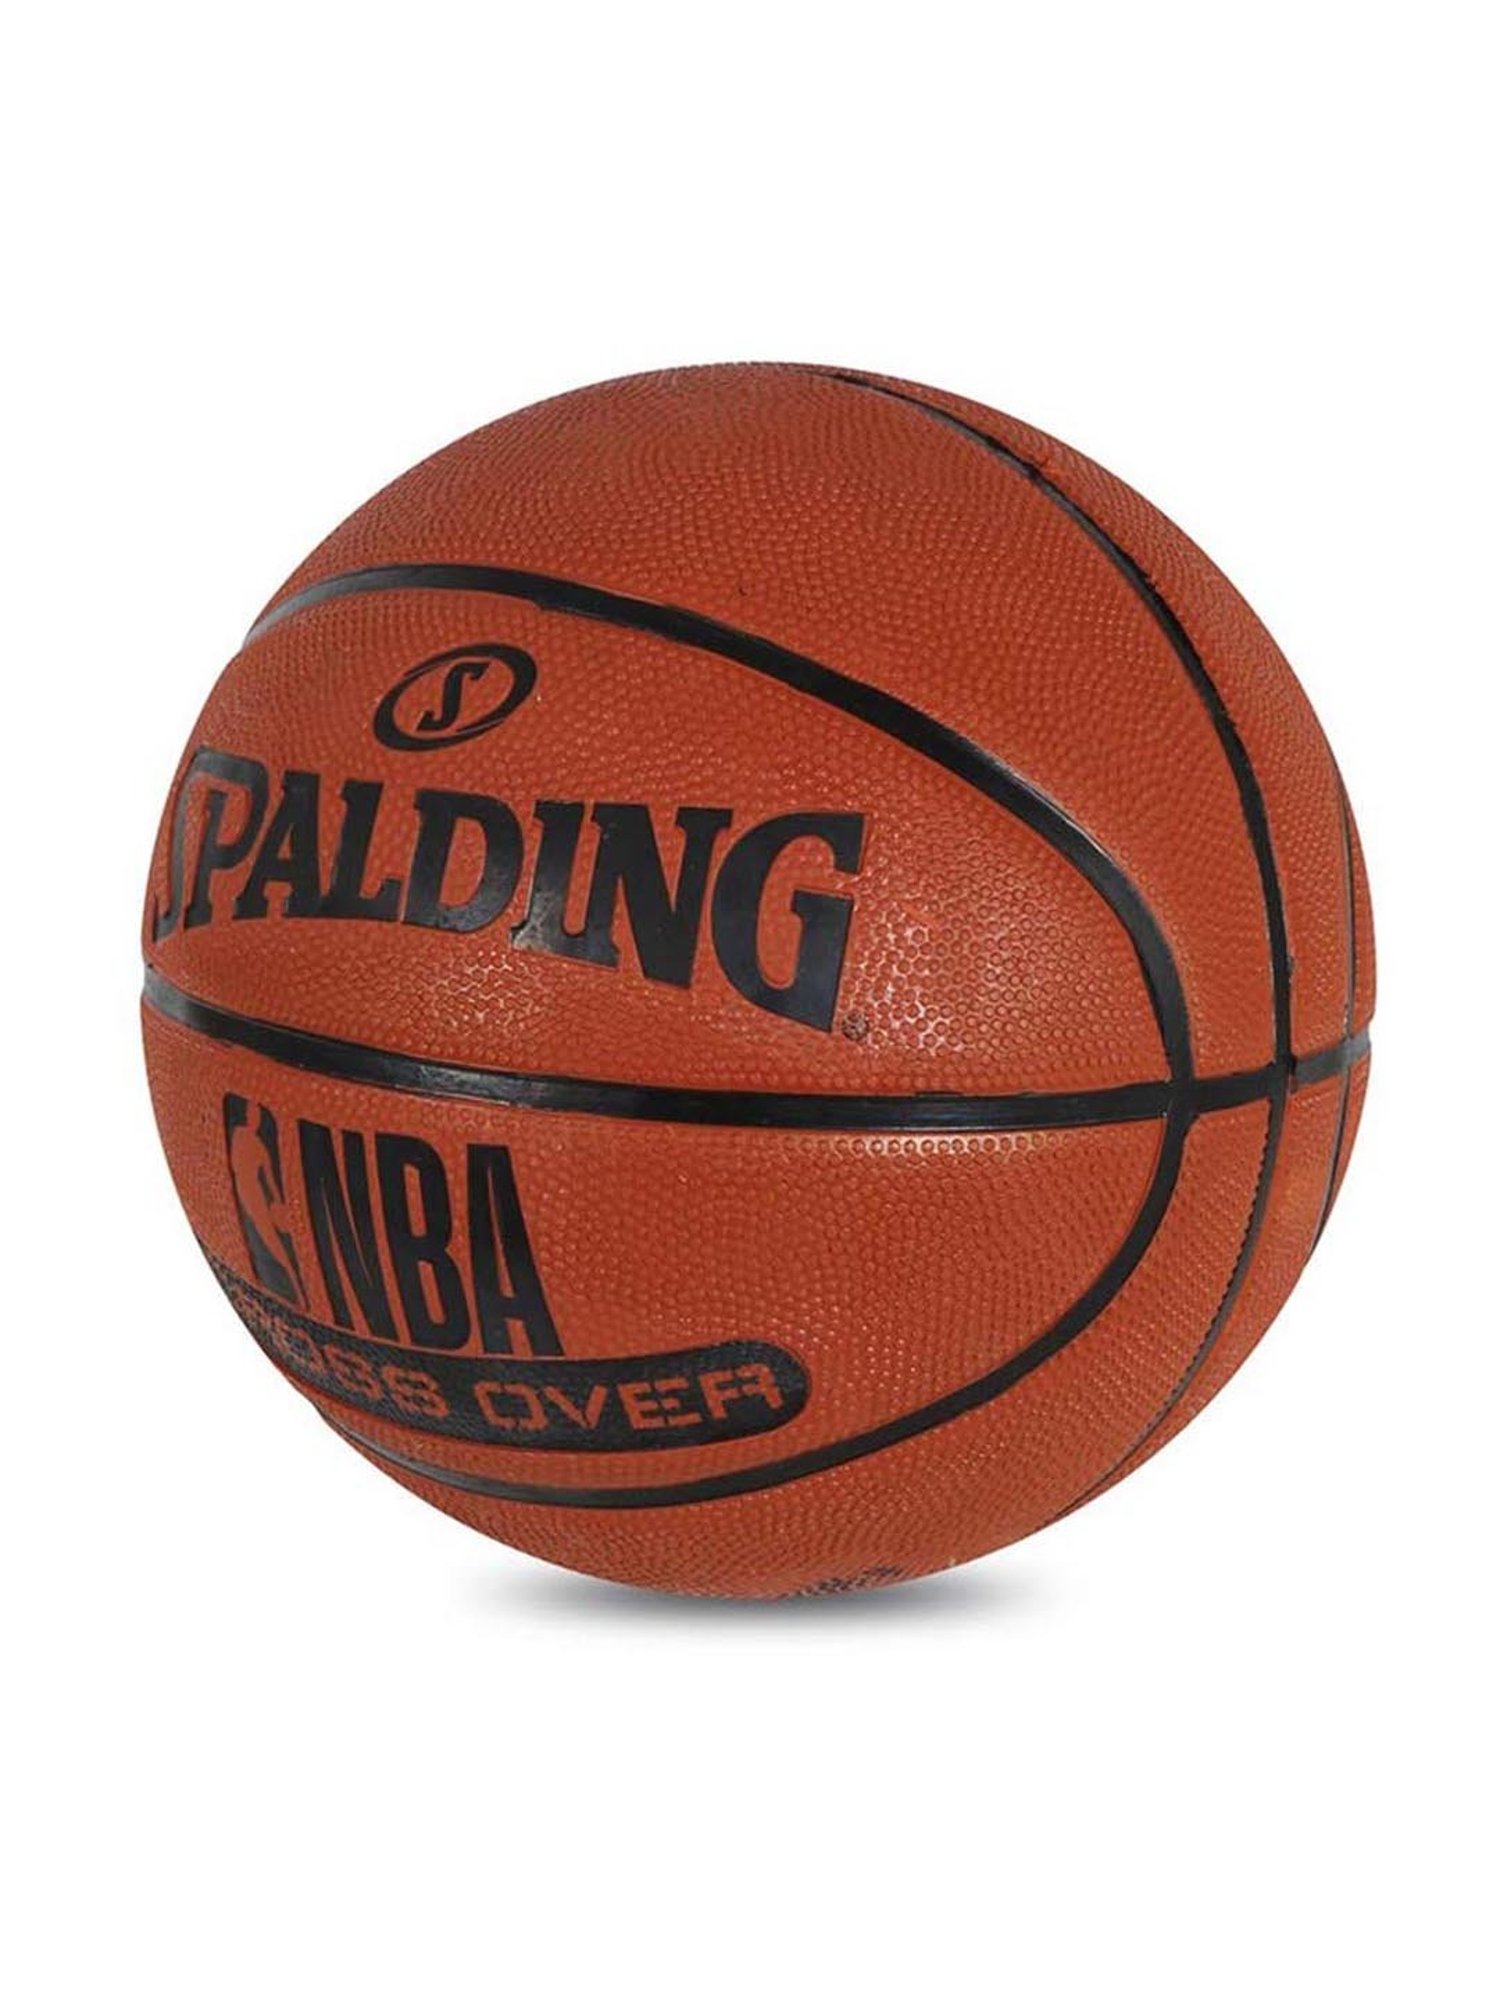 Spalding Orange Crossover NBA Basketball